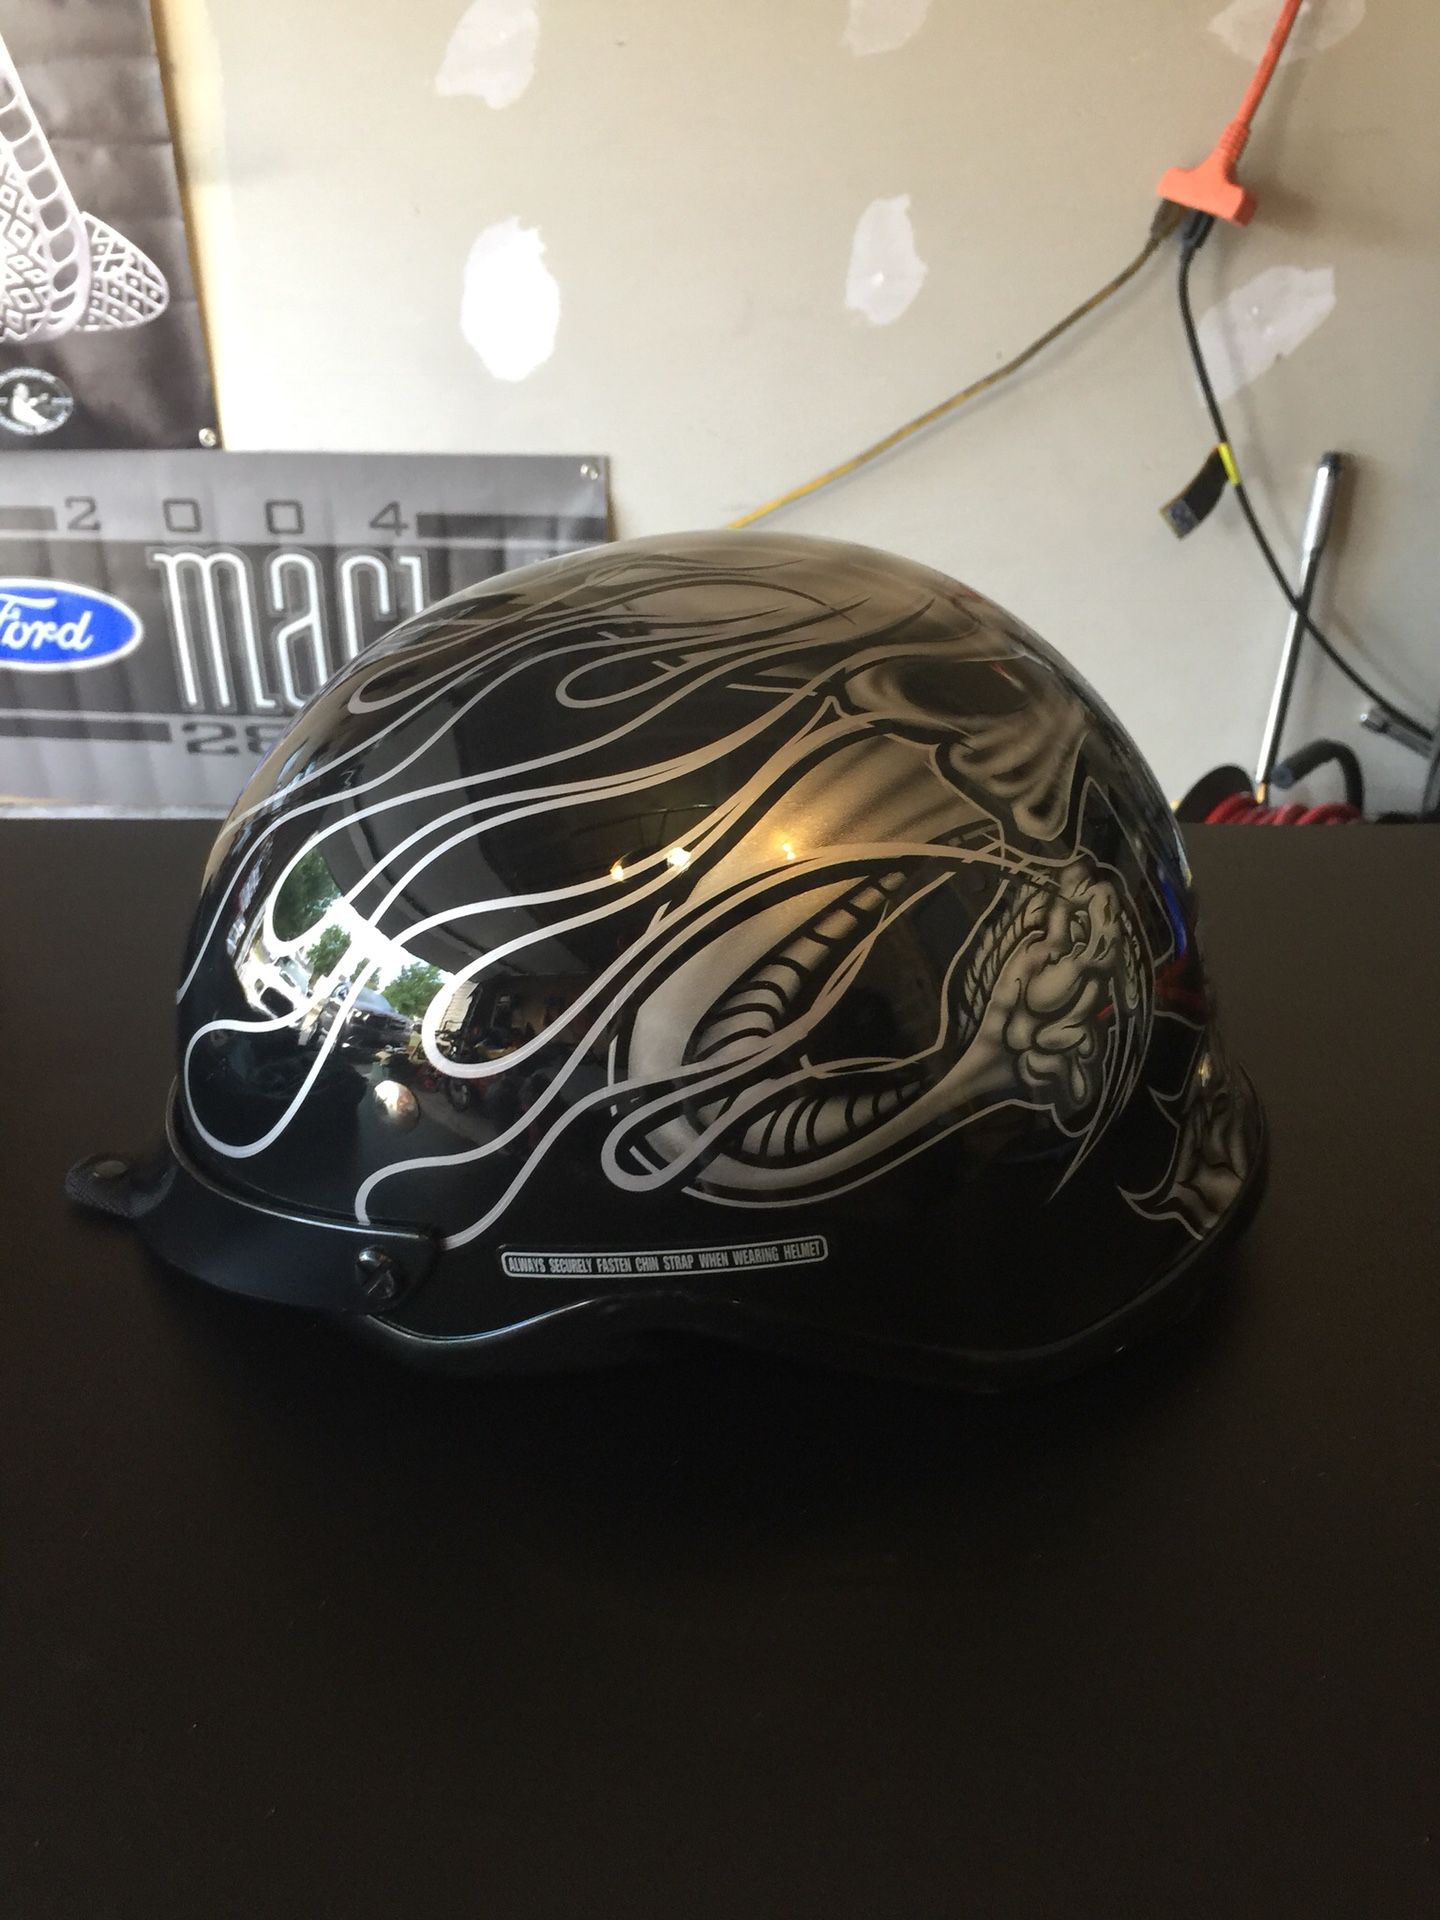 Brand new HJC Adult Medium “Stitcher” helmet